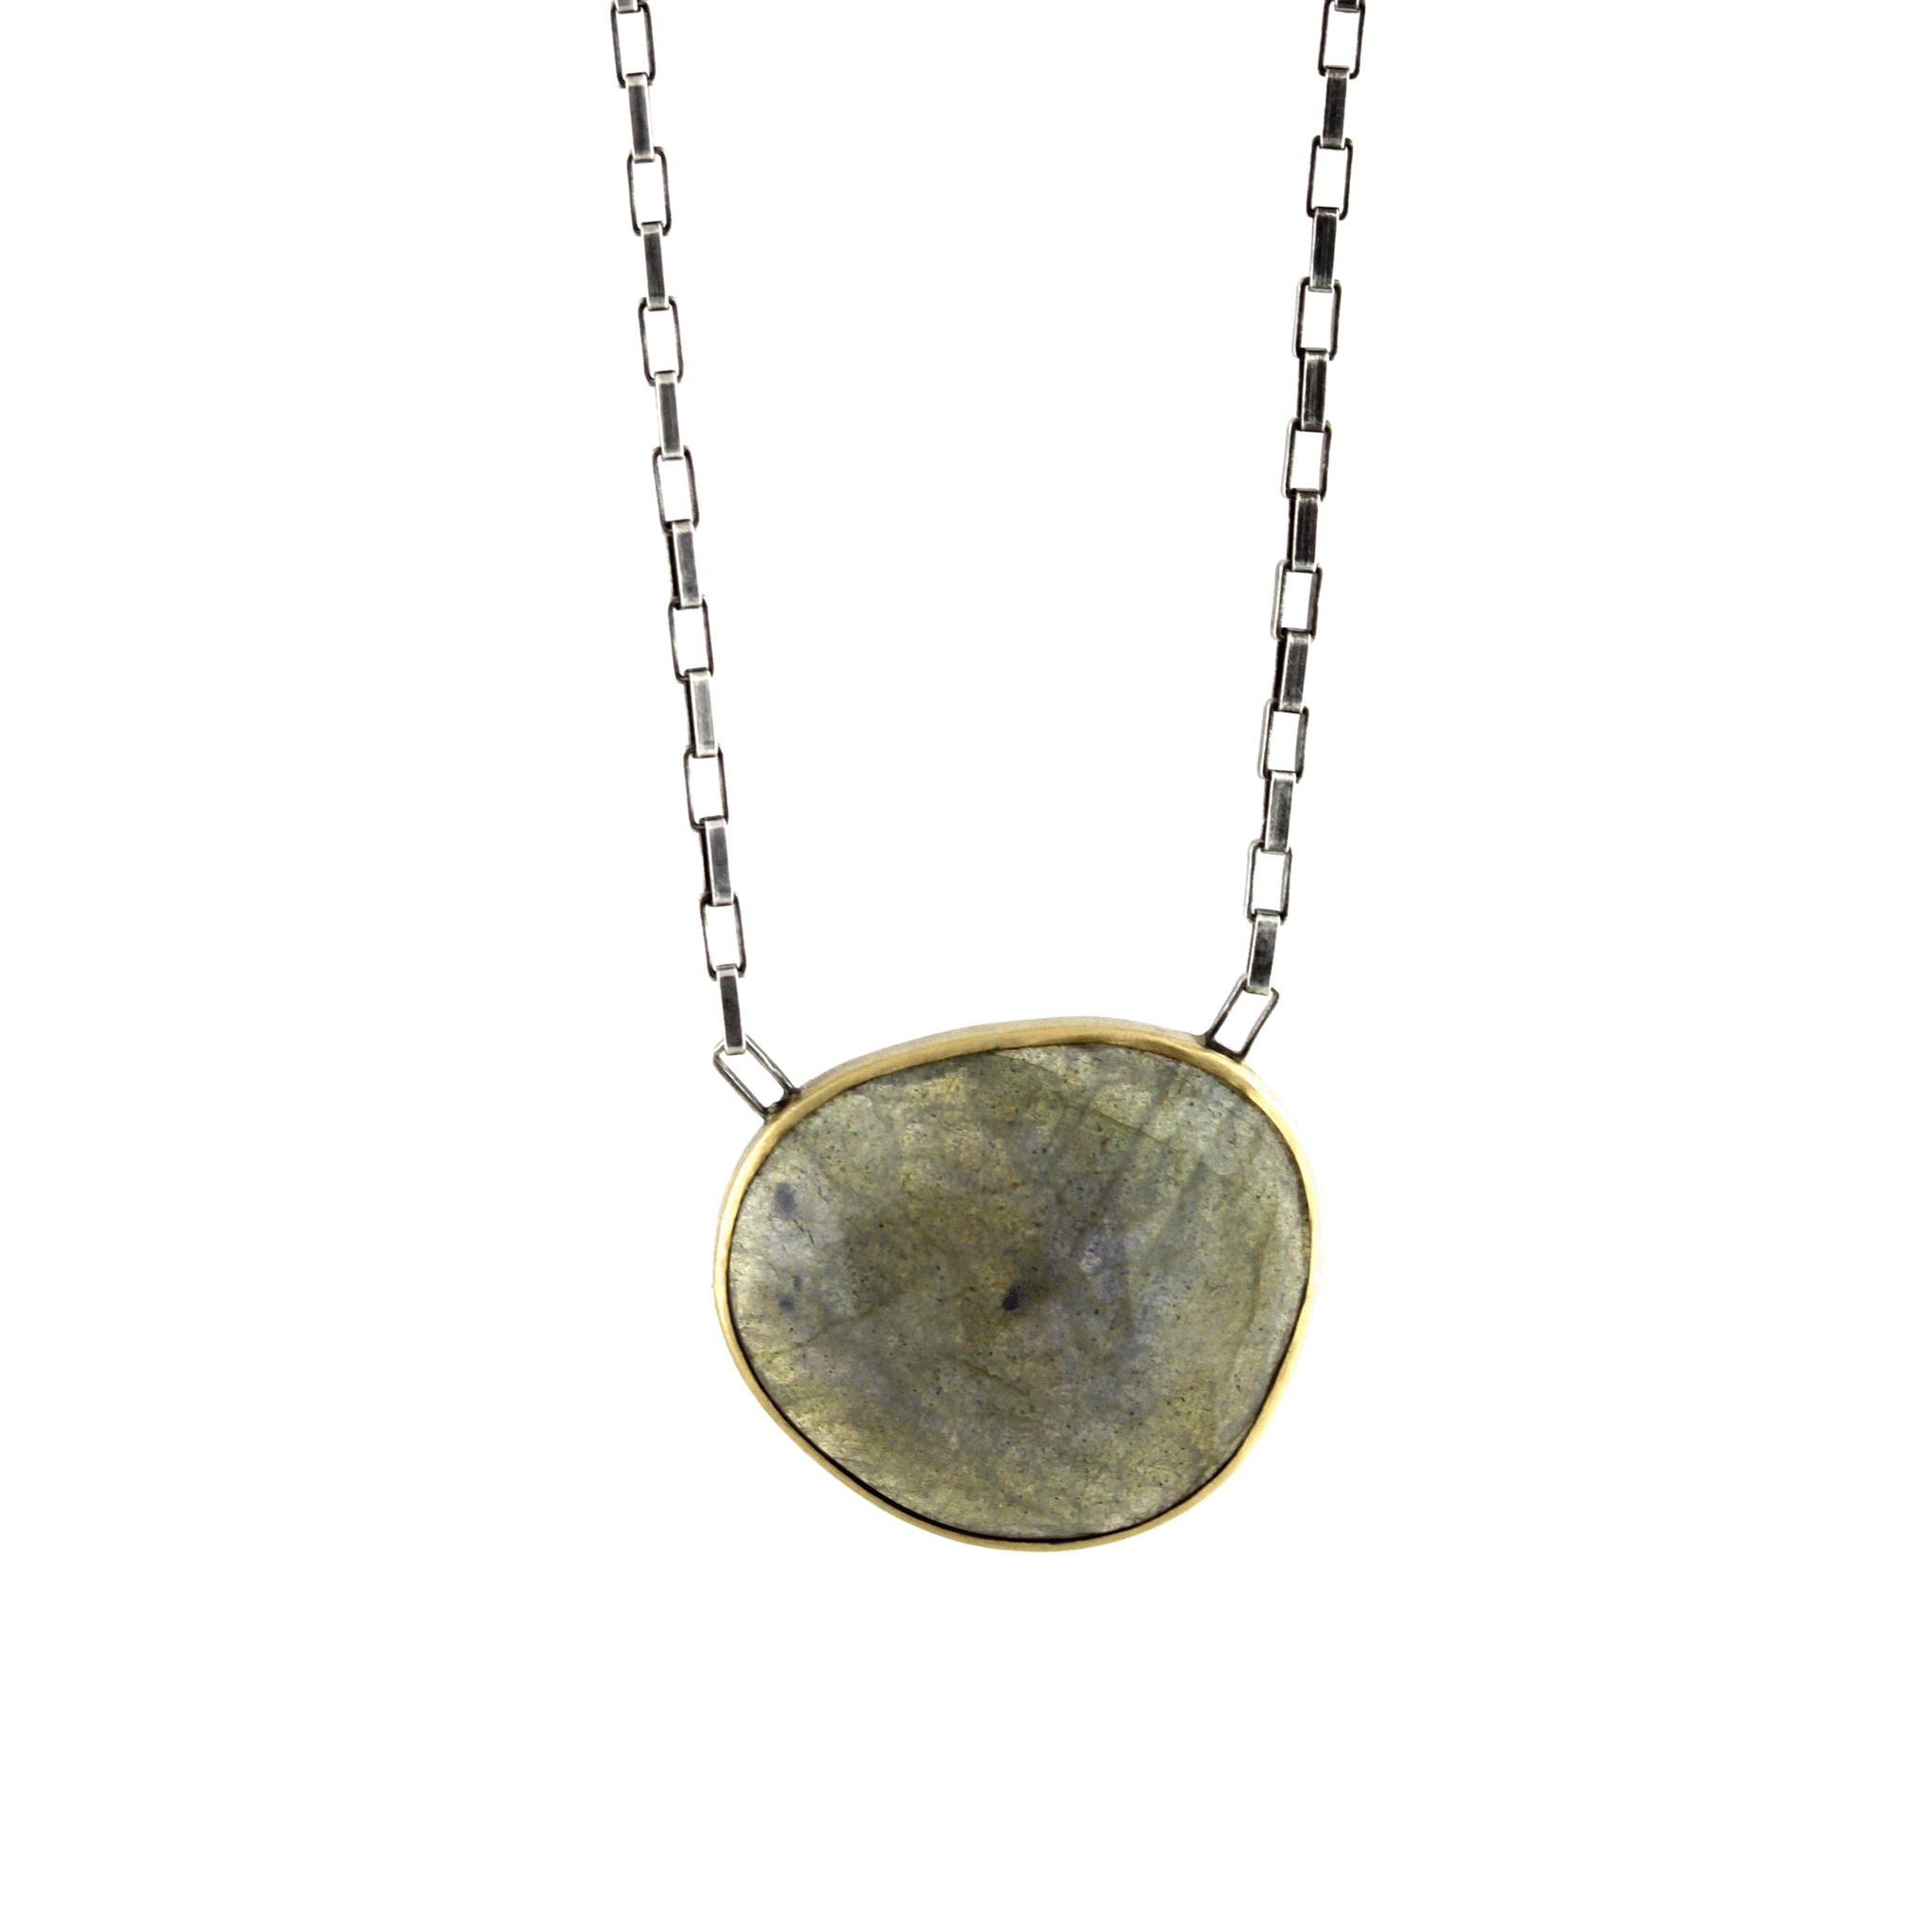 Gemstone necklace - labradorite necklace - Rebecca Lankford Designs